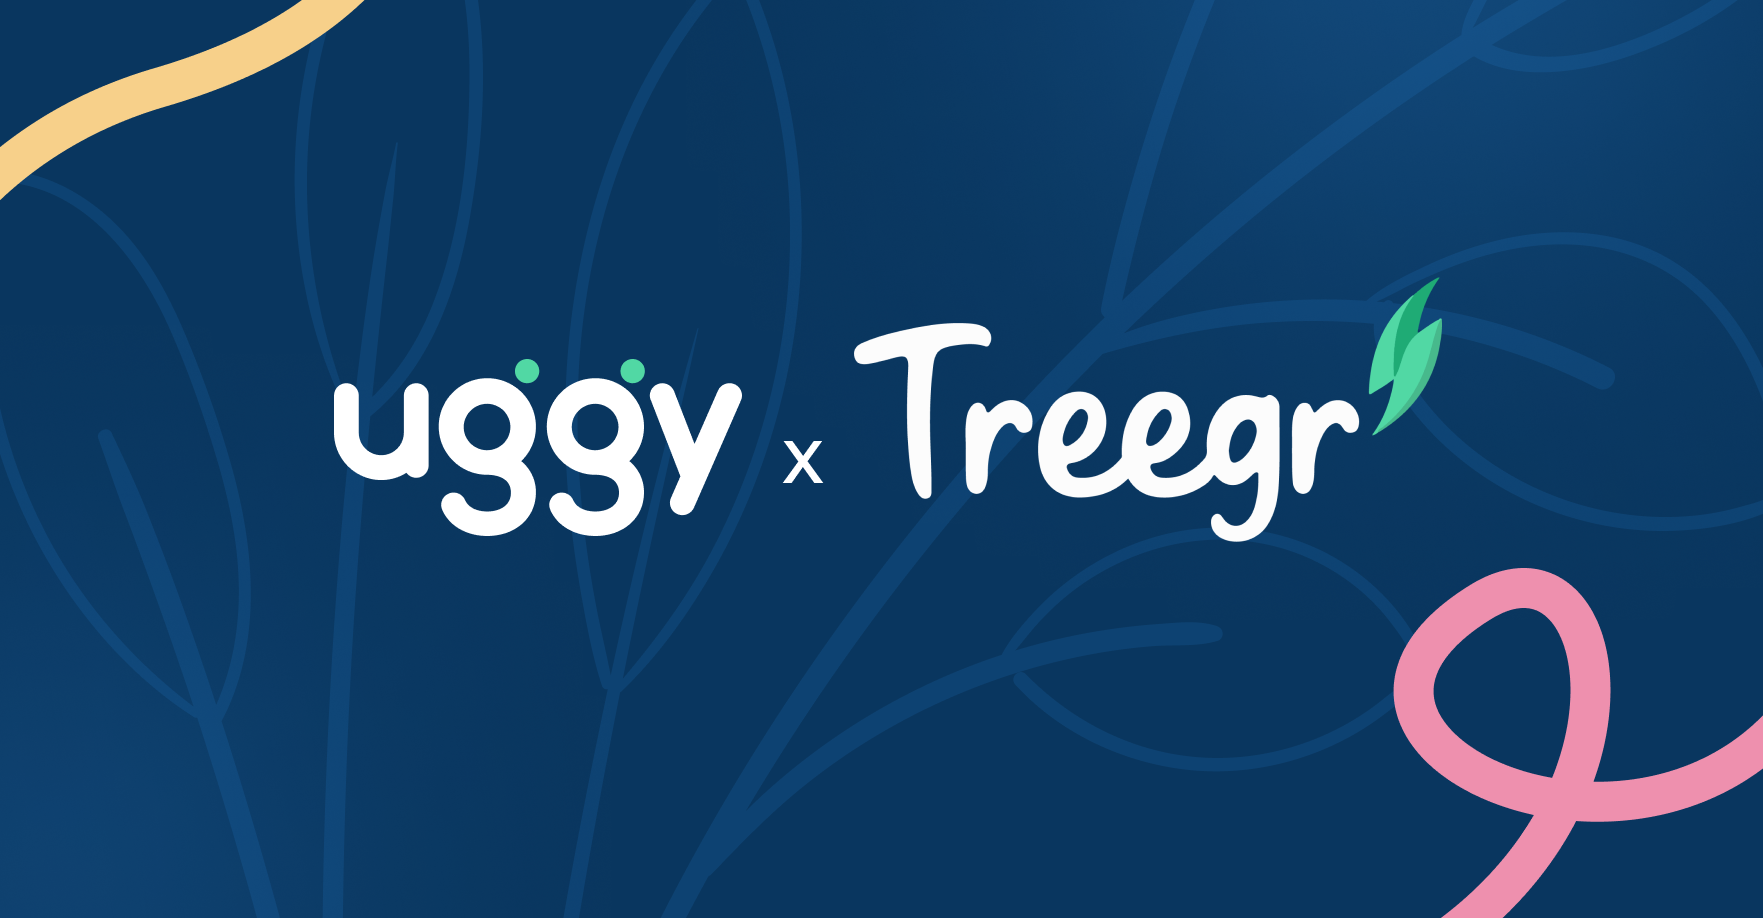 lphoto de l'acquisition de treegr par uggy, logo uggy, logo treegr